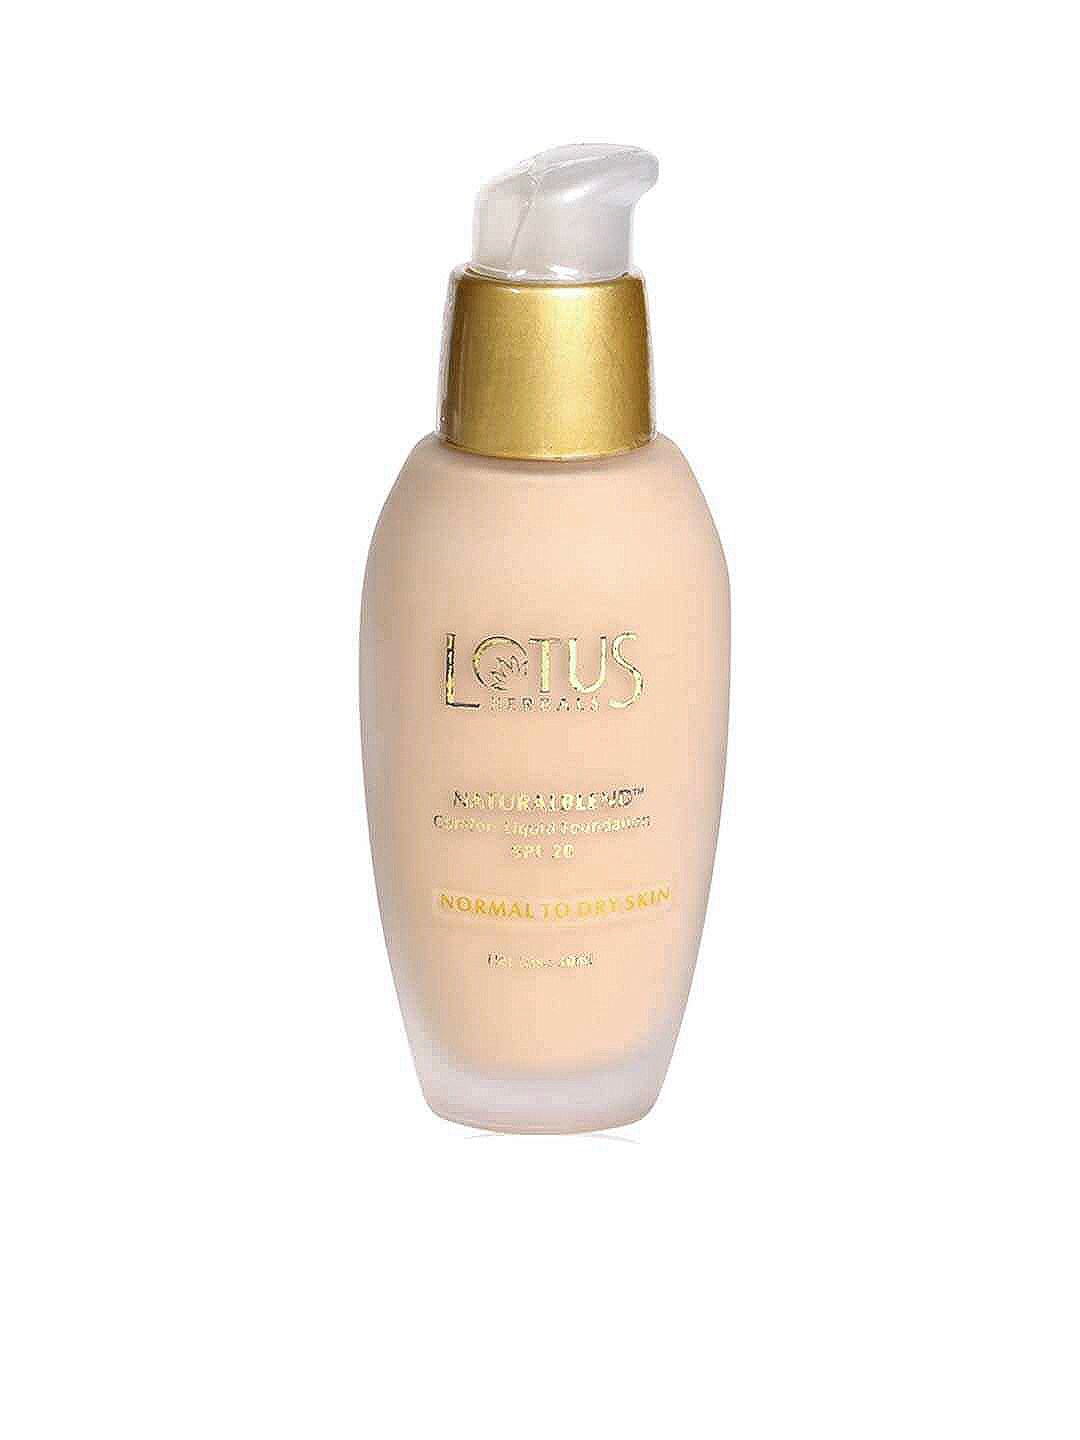 Lotus Herbals Sand Naturalblend Comfort Liquid Foundation 310